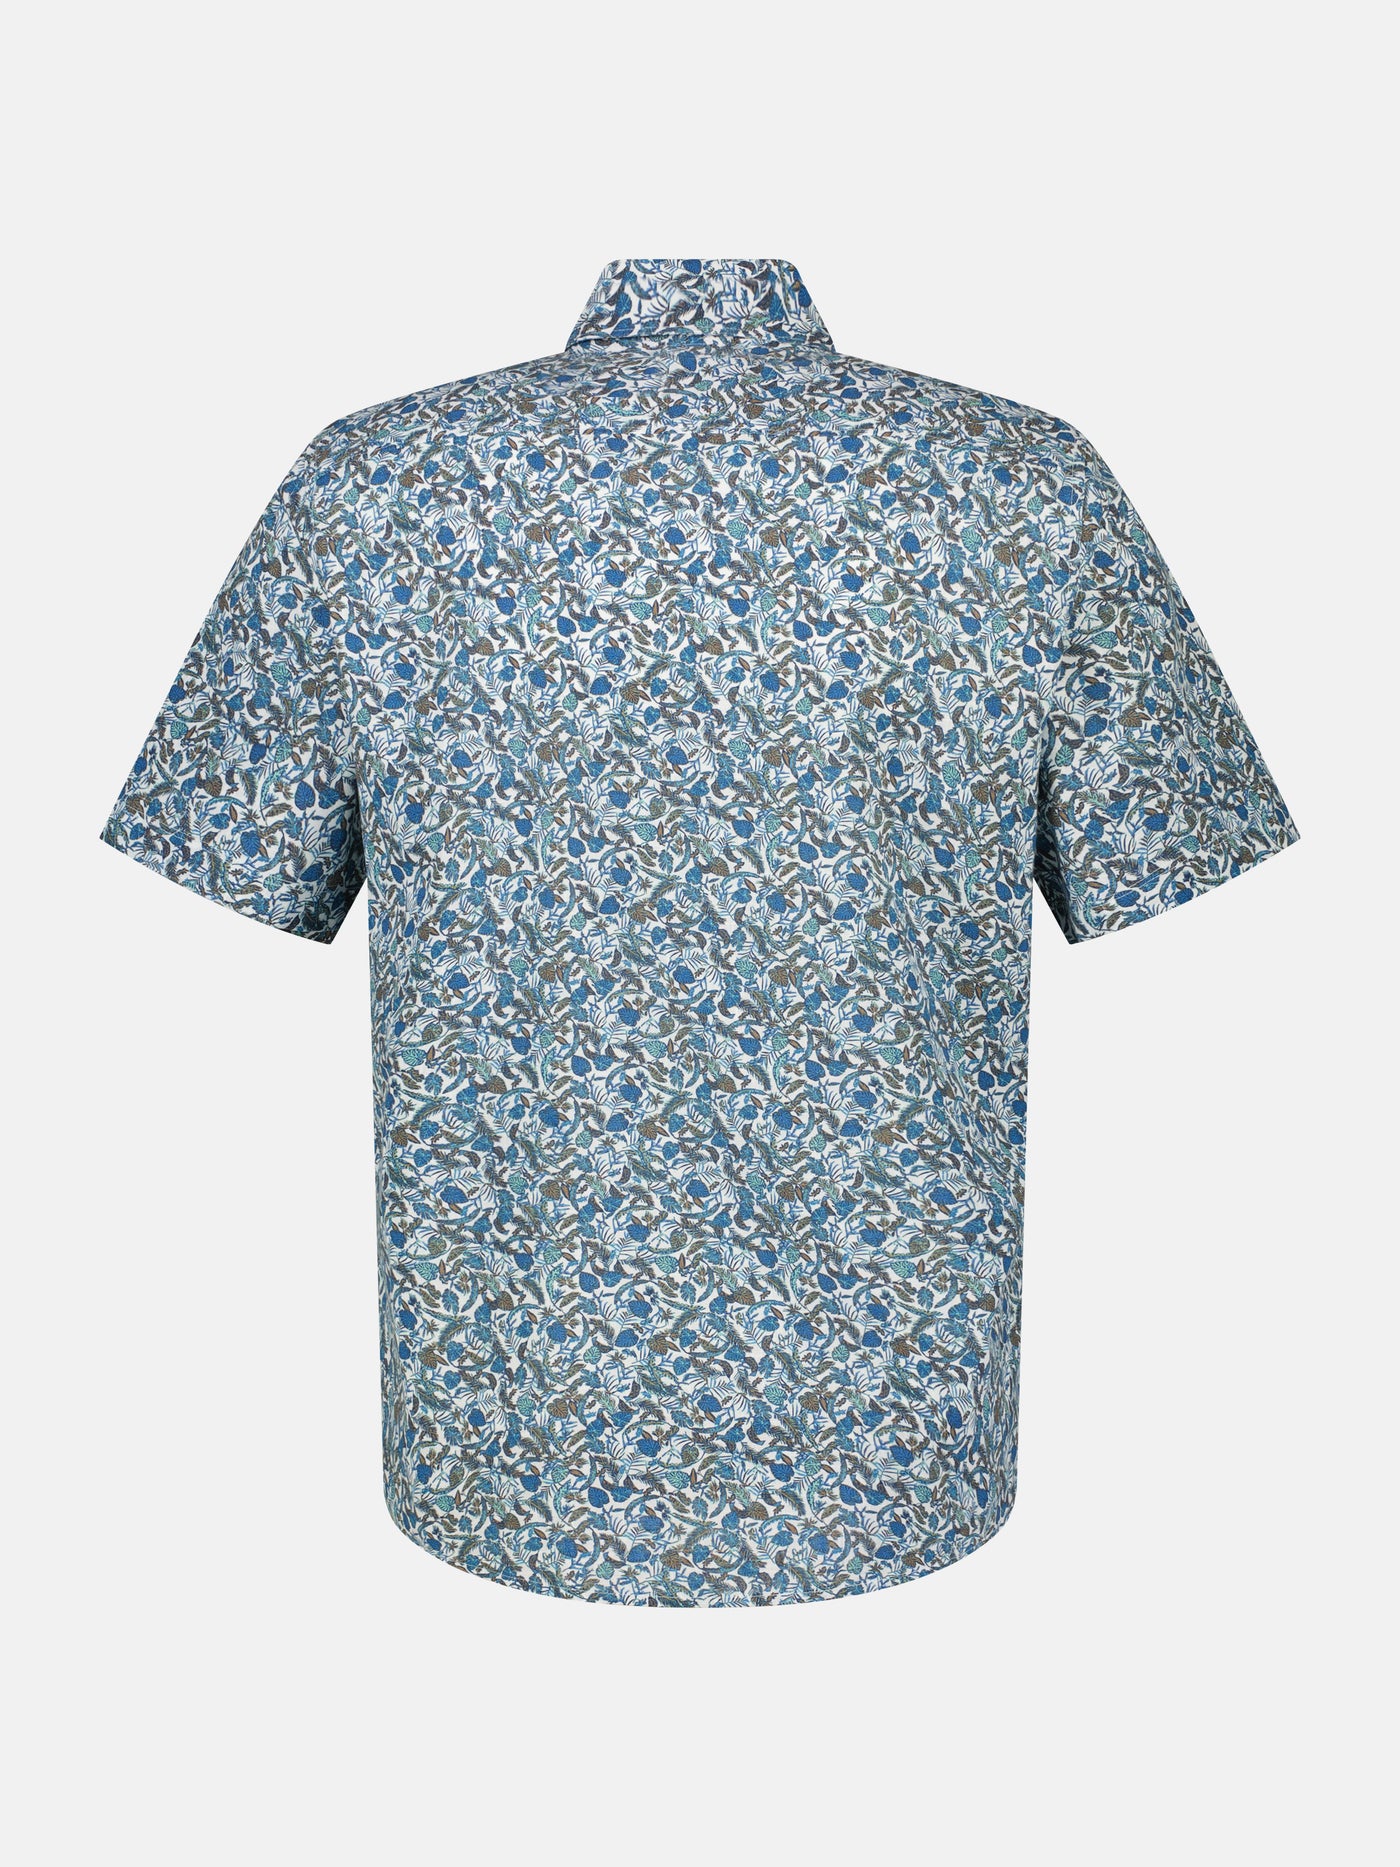 Summery printed half-sleeve shirt